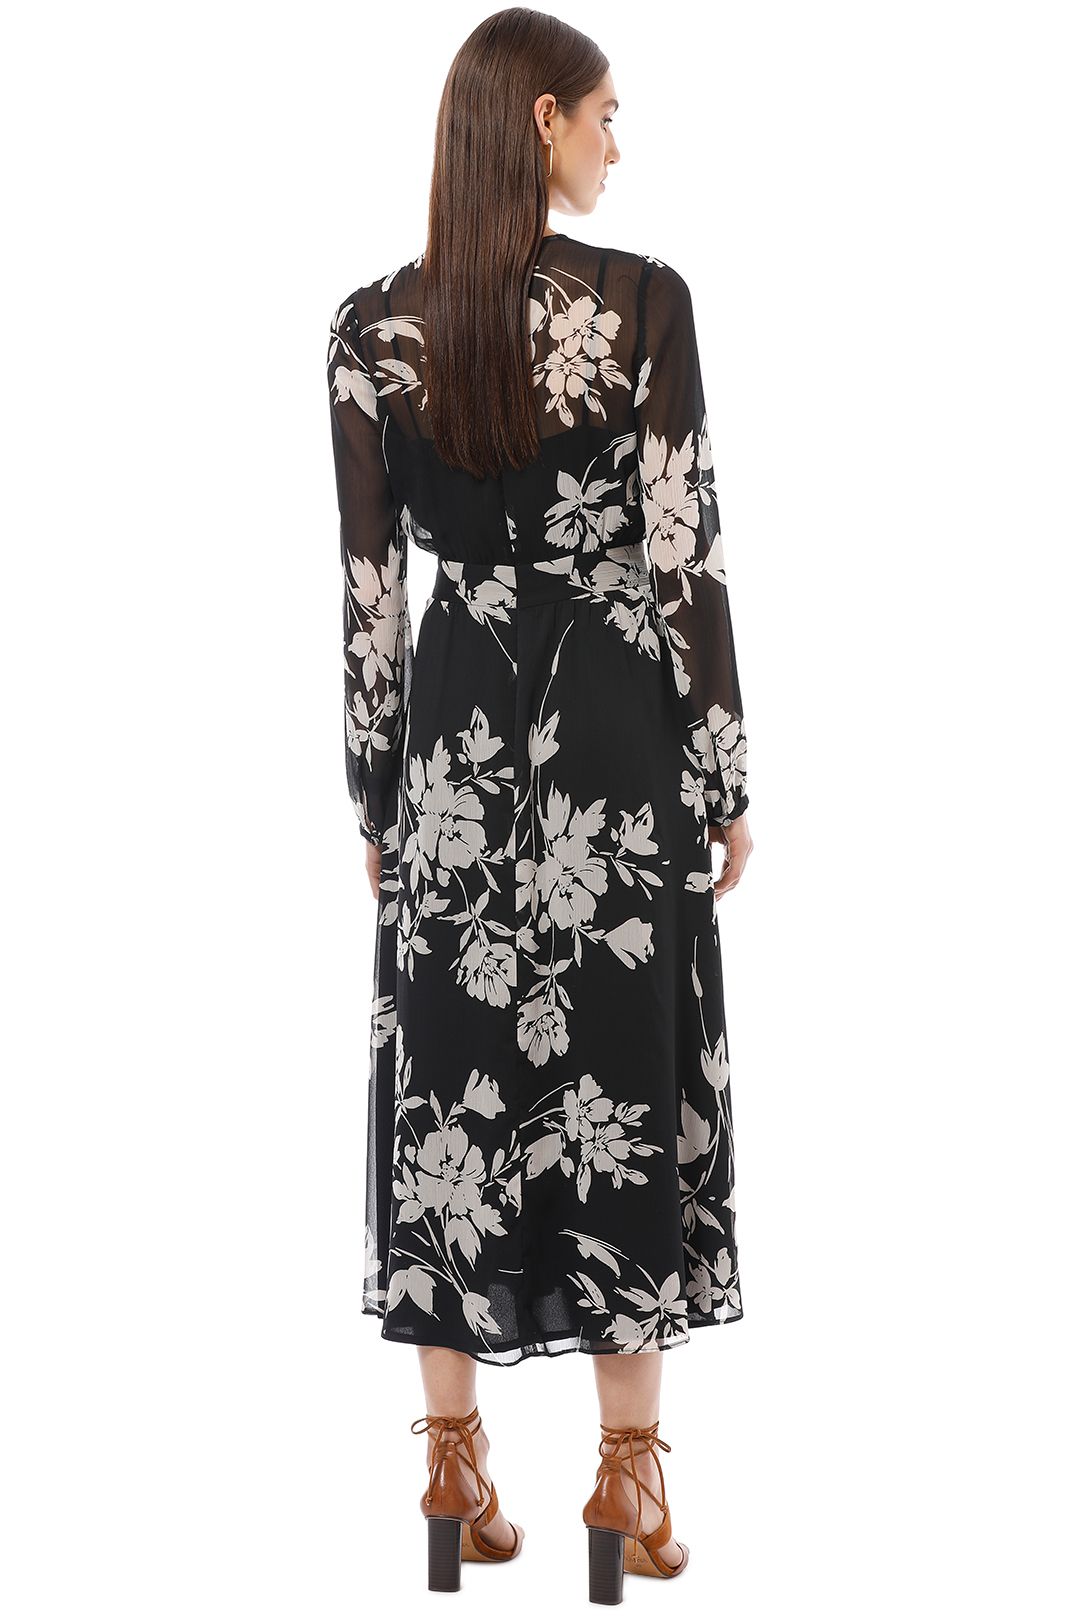 Cue - Monochrome Floral Midi Dress - Black - Back